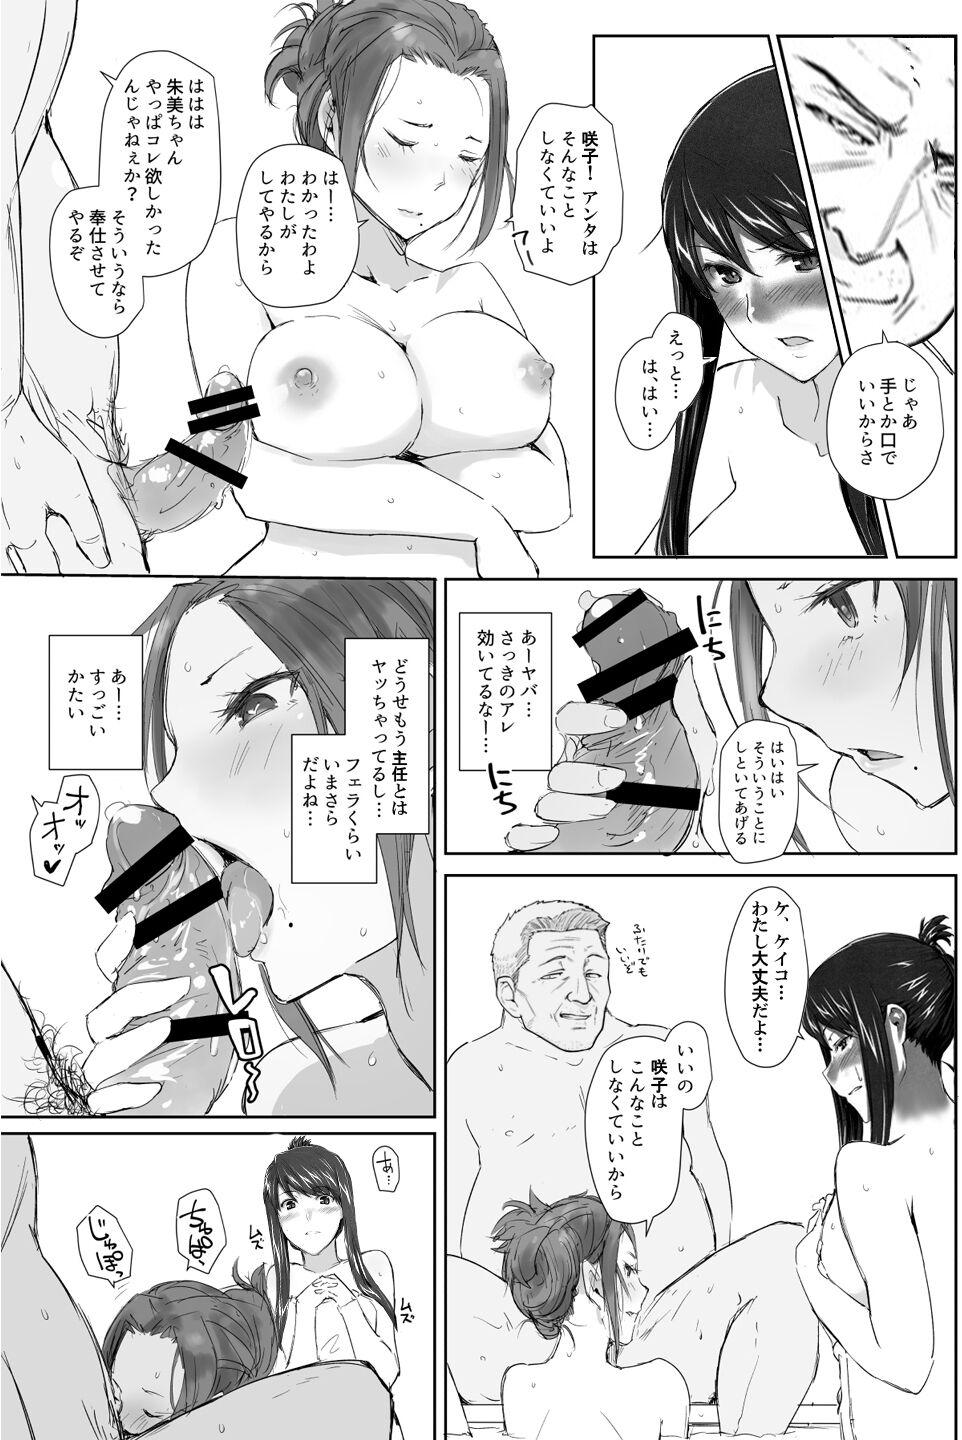 Sakiko-san in delusion Vol.1 Ver.1.1 ~Sakiko-san's circumstance at an educational training~ Stupid Sakiko (collage) on-going 161